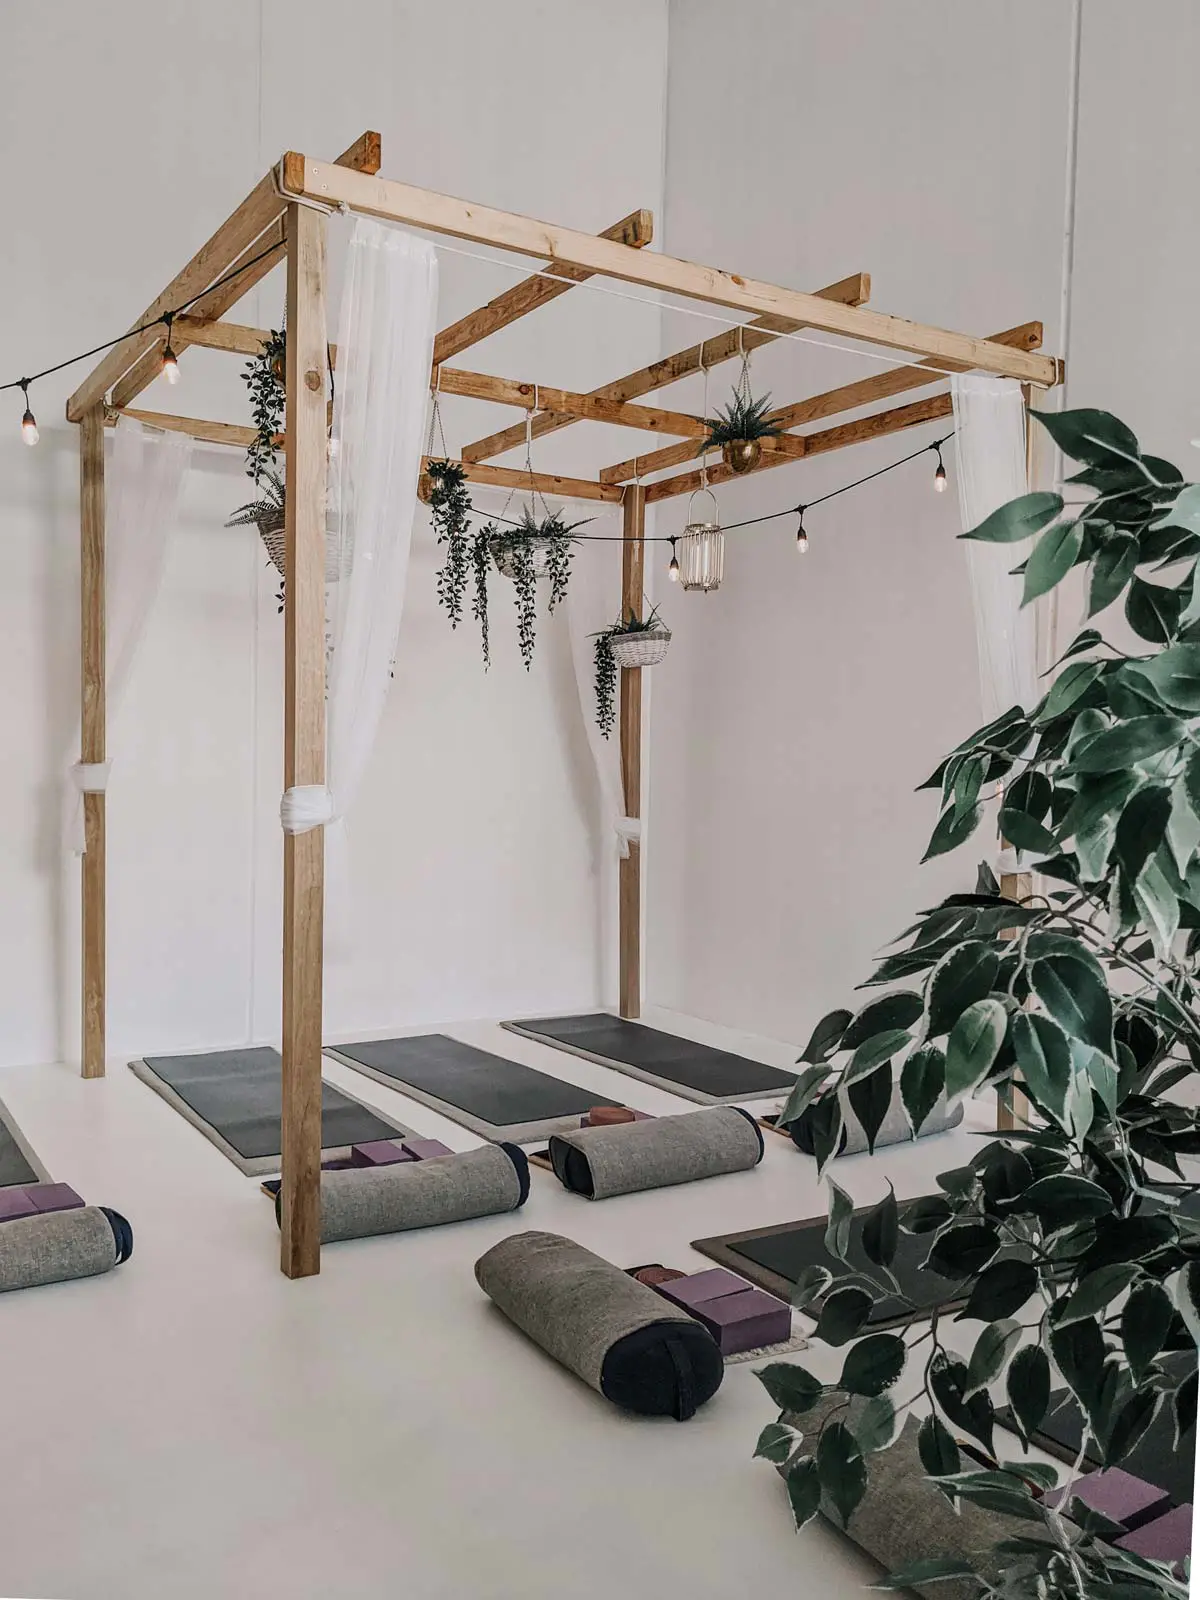 Yoga studio with mats and plants